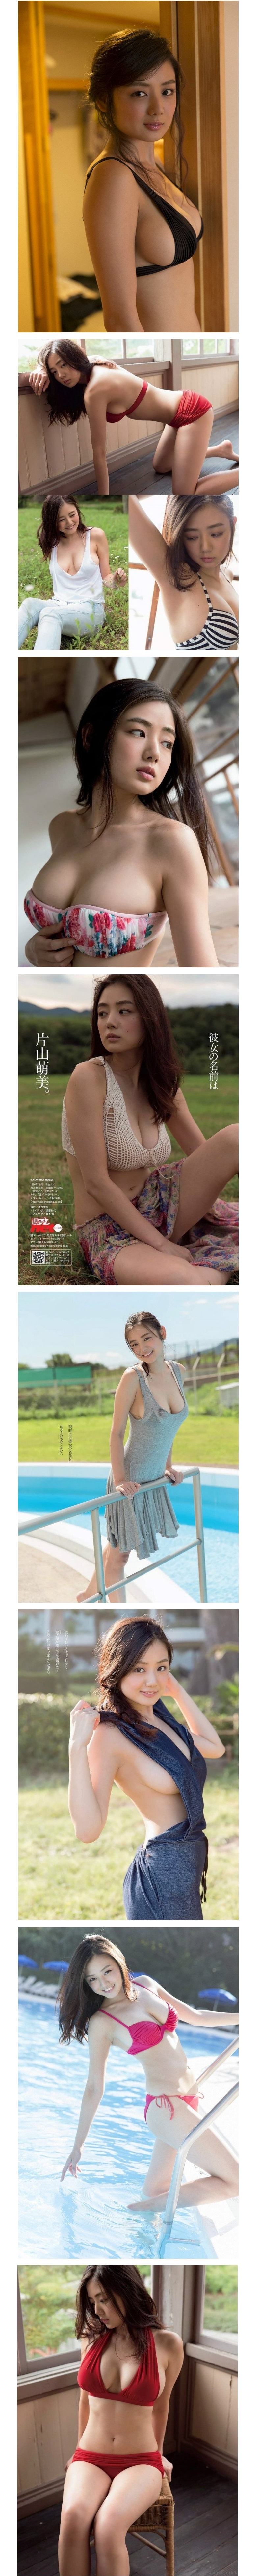 G Cup gravure model and actress Moemi Katayama